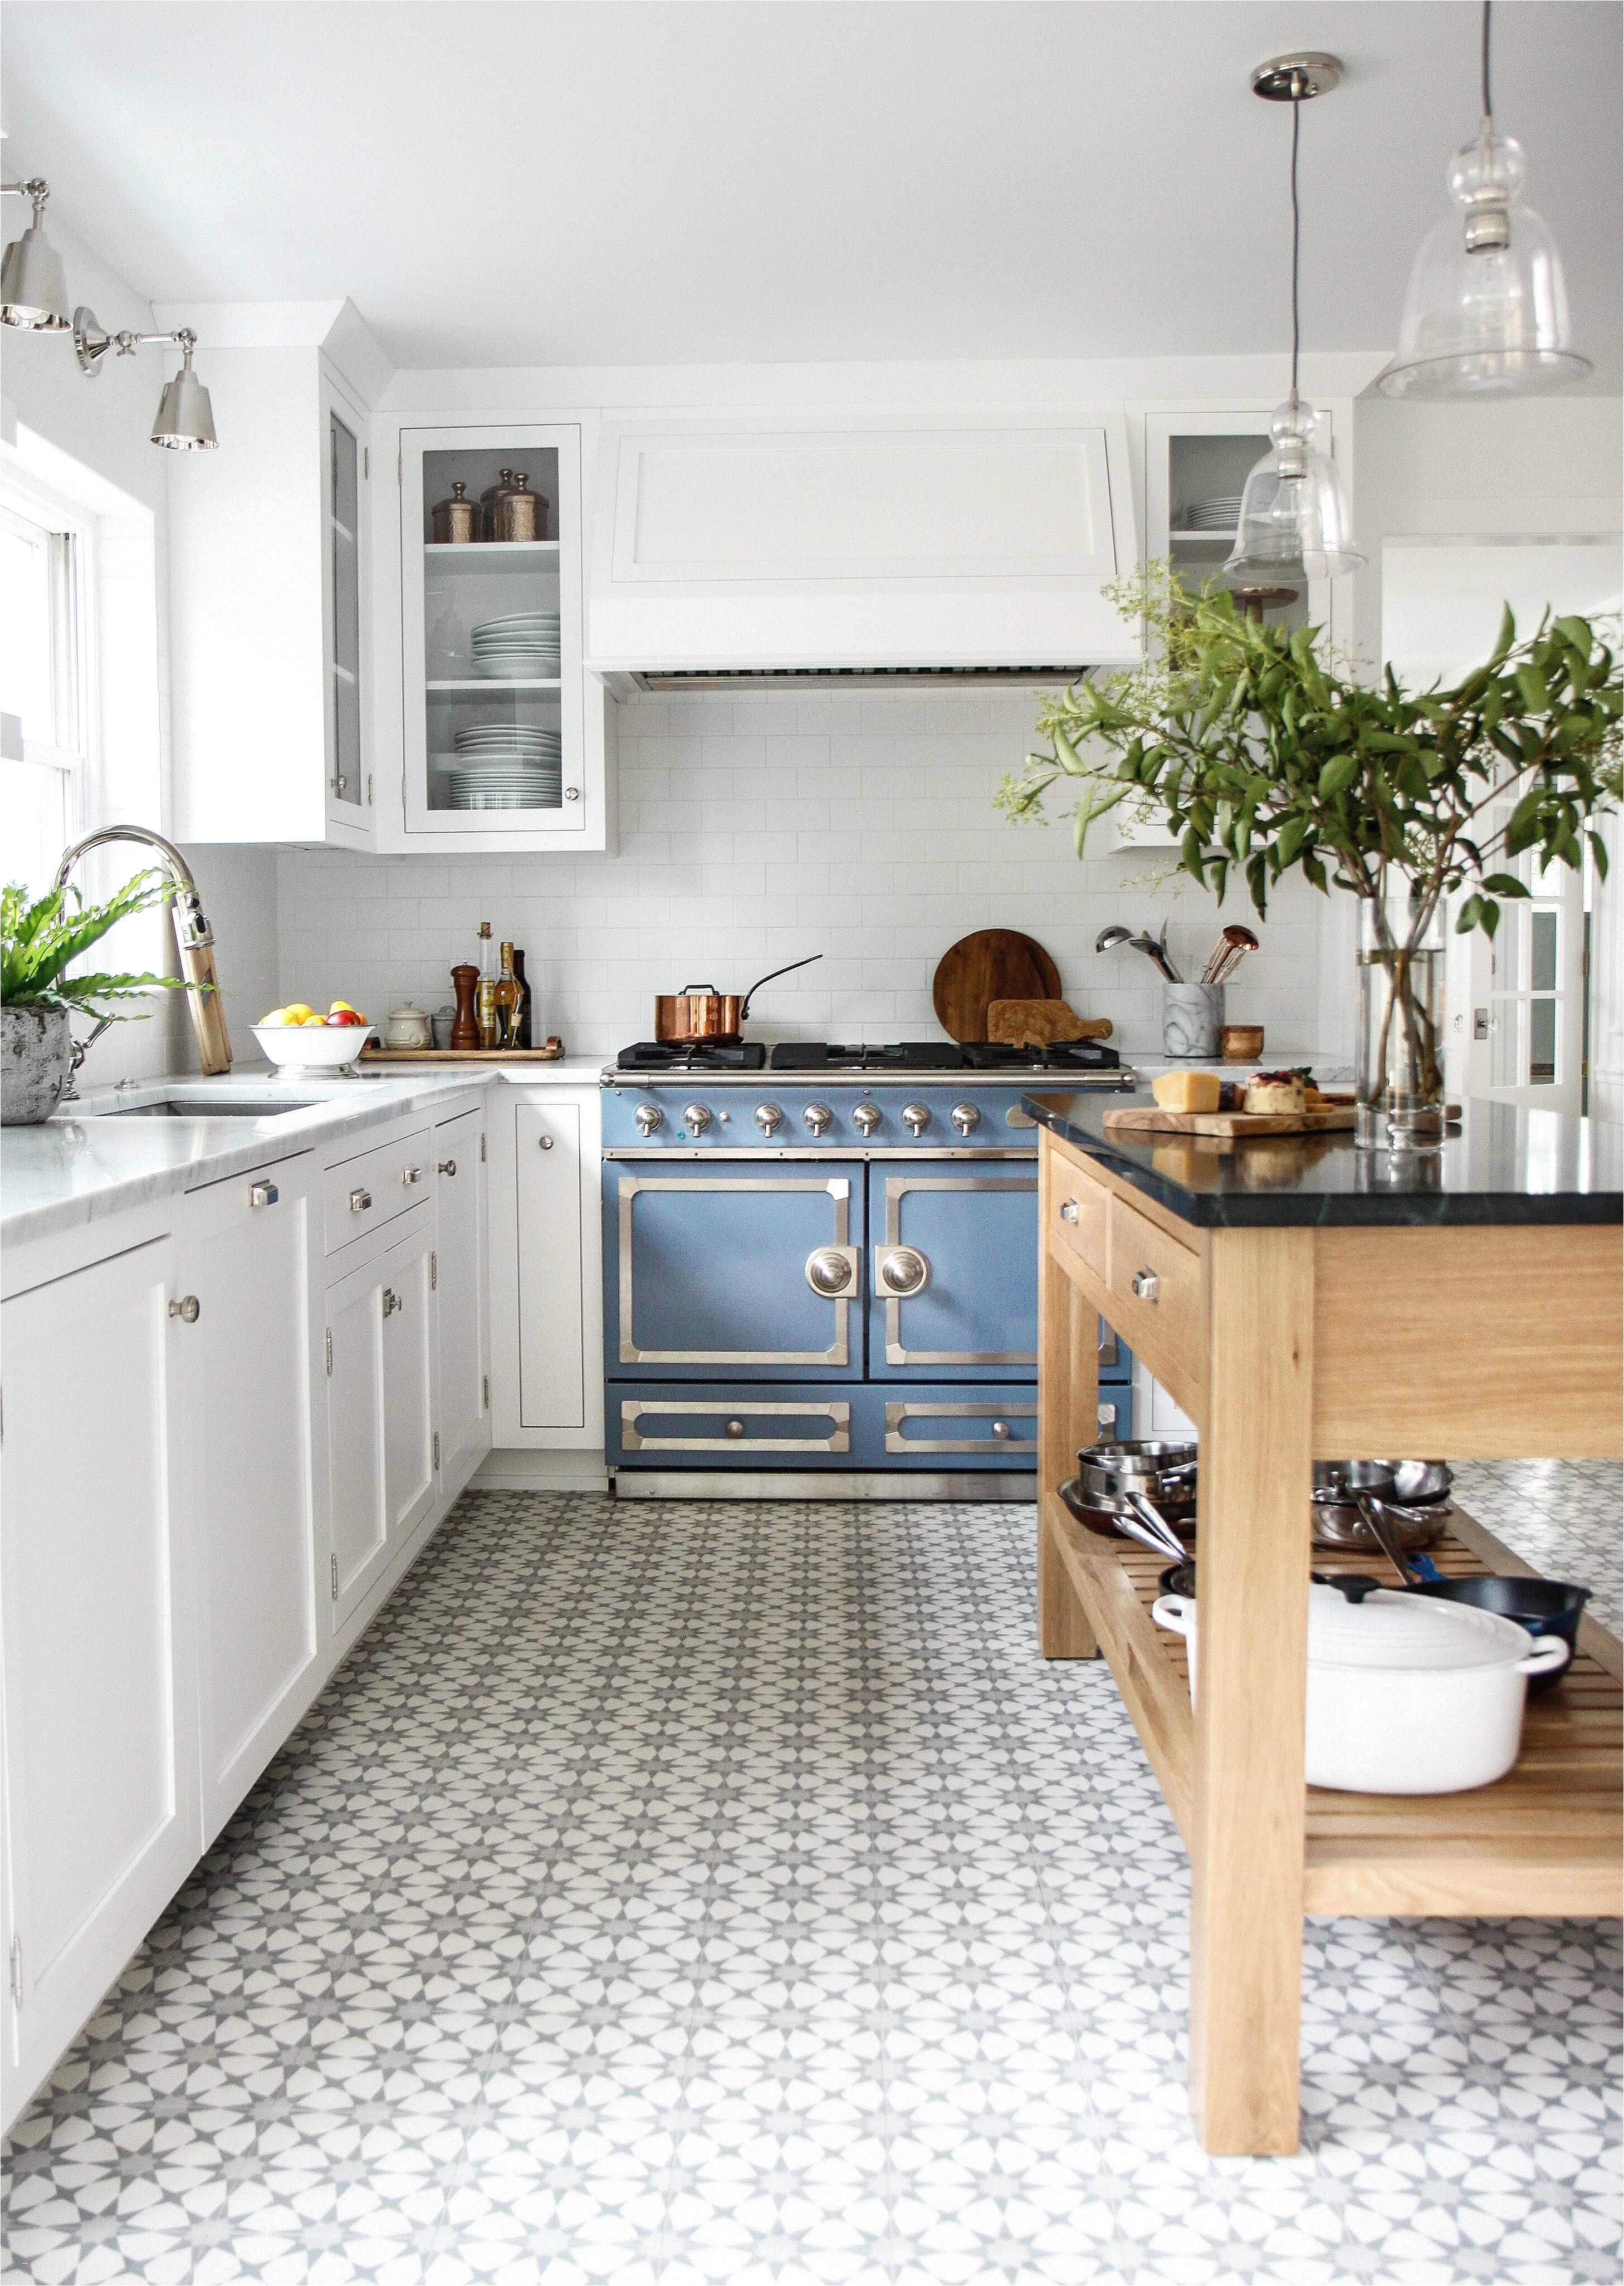 Tile Designs for Kitchen Floors Beautiful Wallpaper Ideas Kitchen Floor Tile Designs Kitchen Flooring 0d